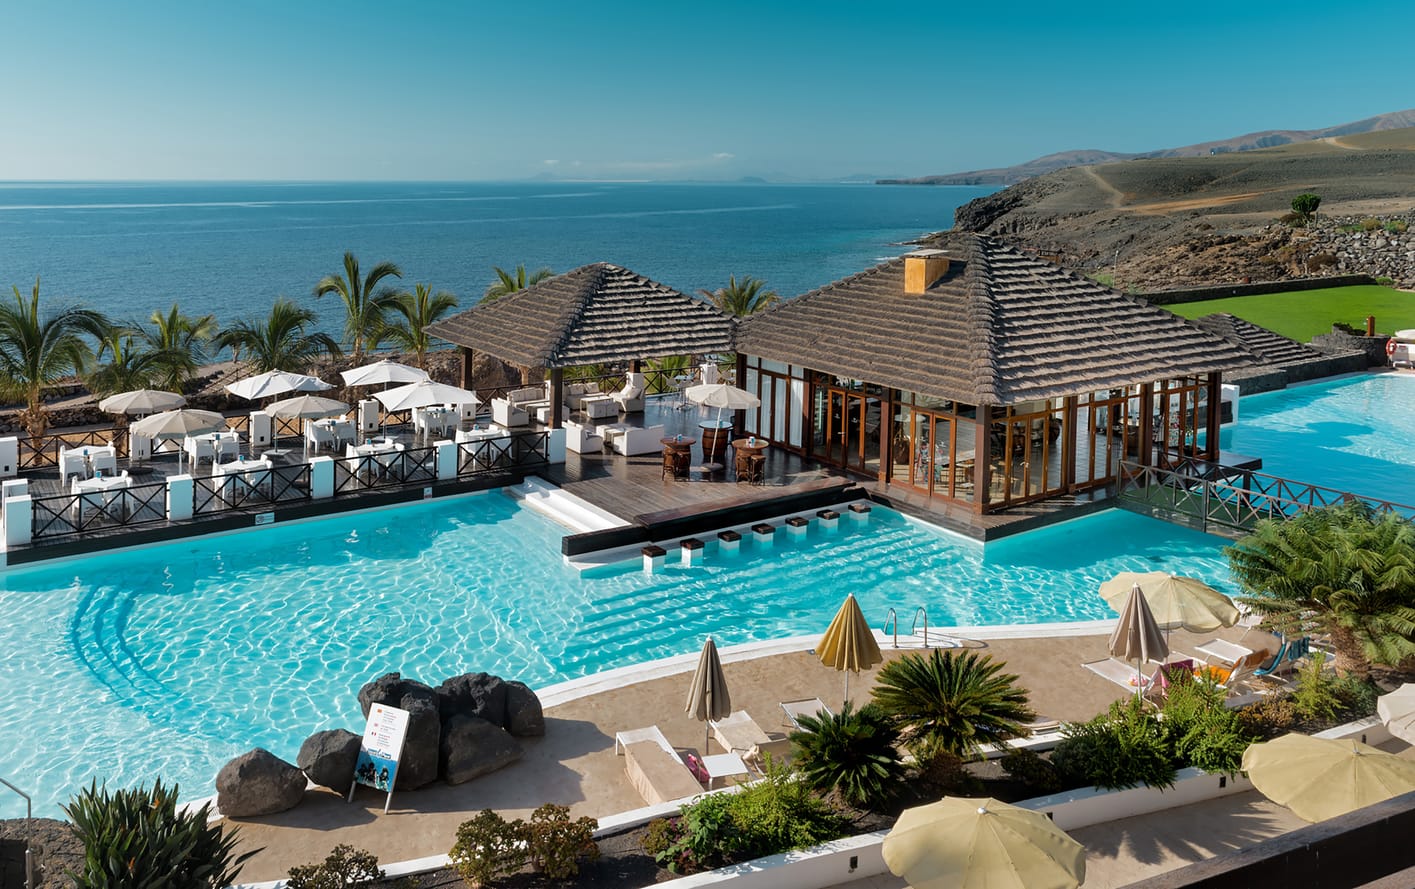 Secrets Lanzarote Resort & Spa, 5 star hotels in tenerife spain